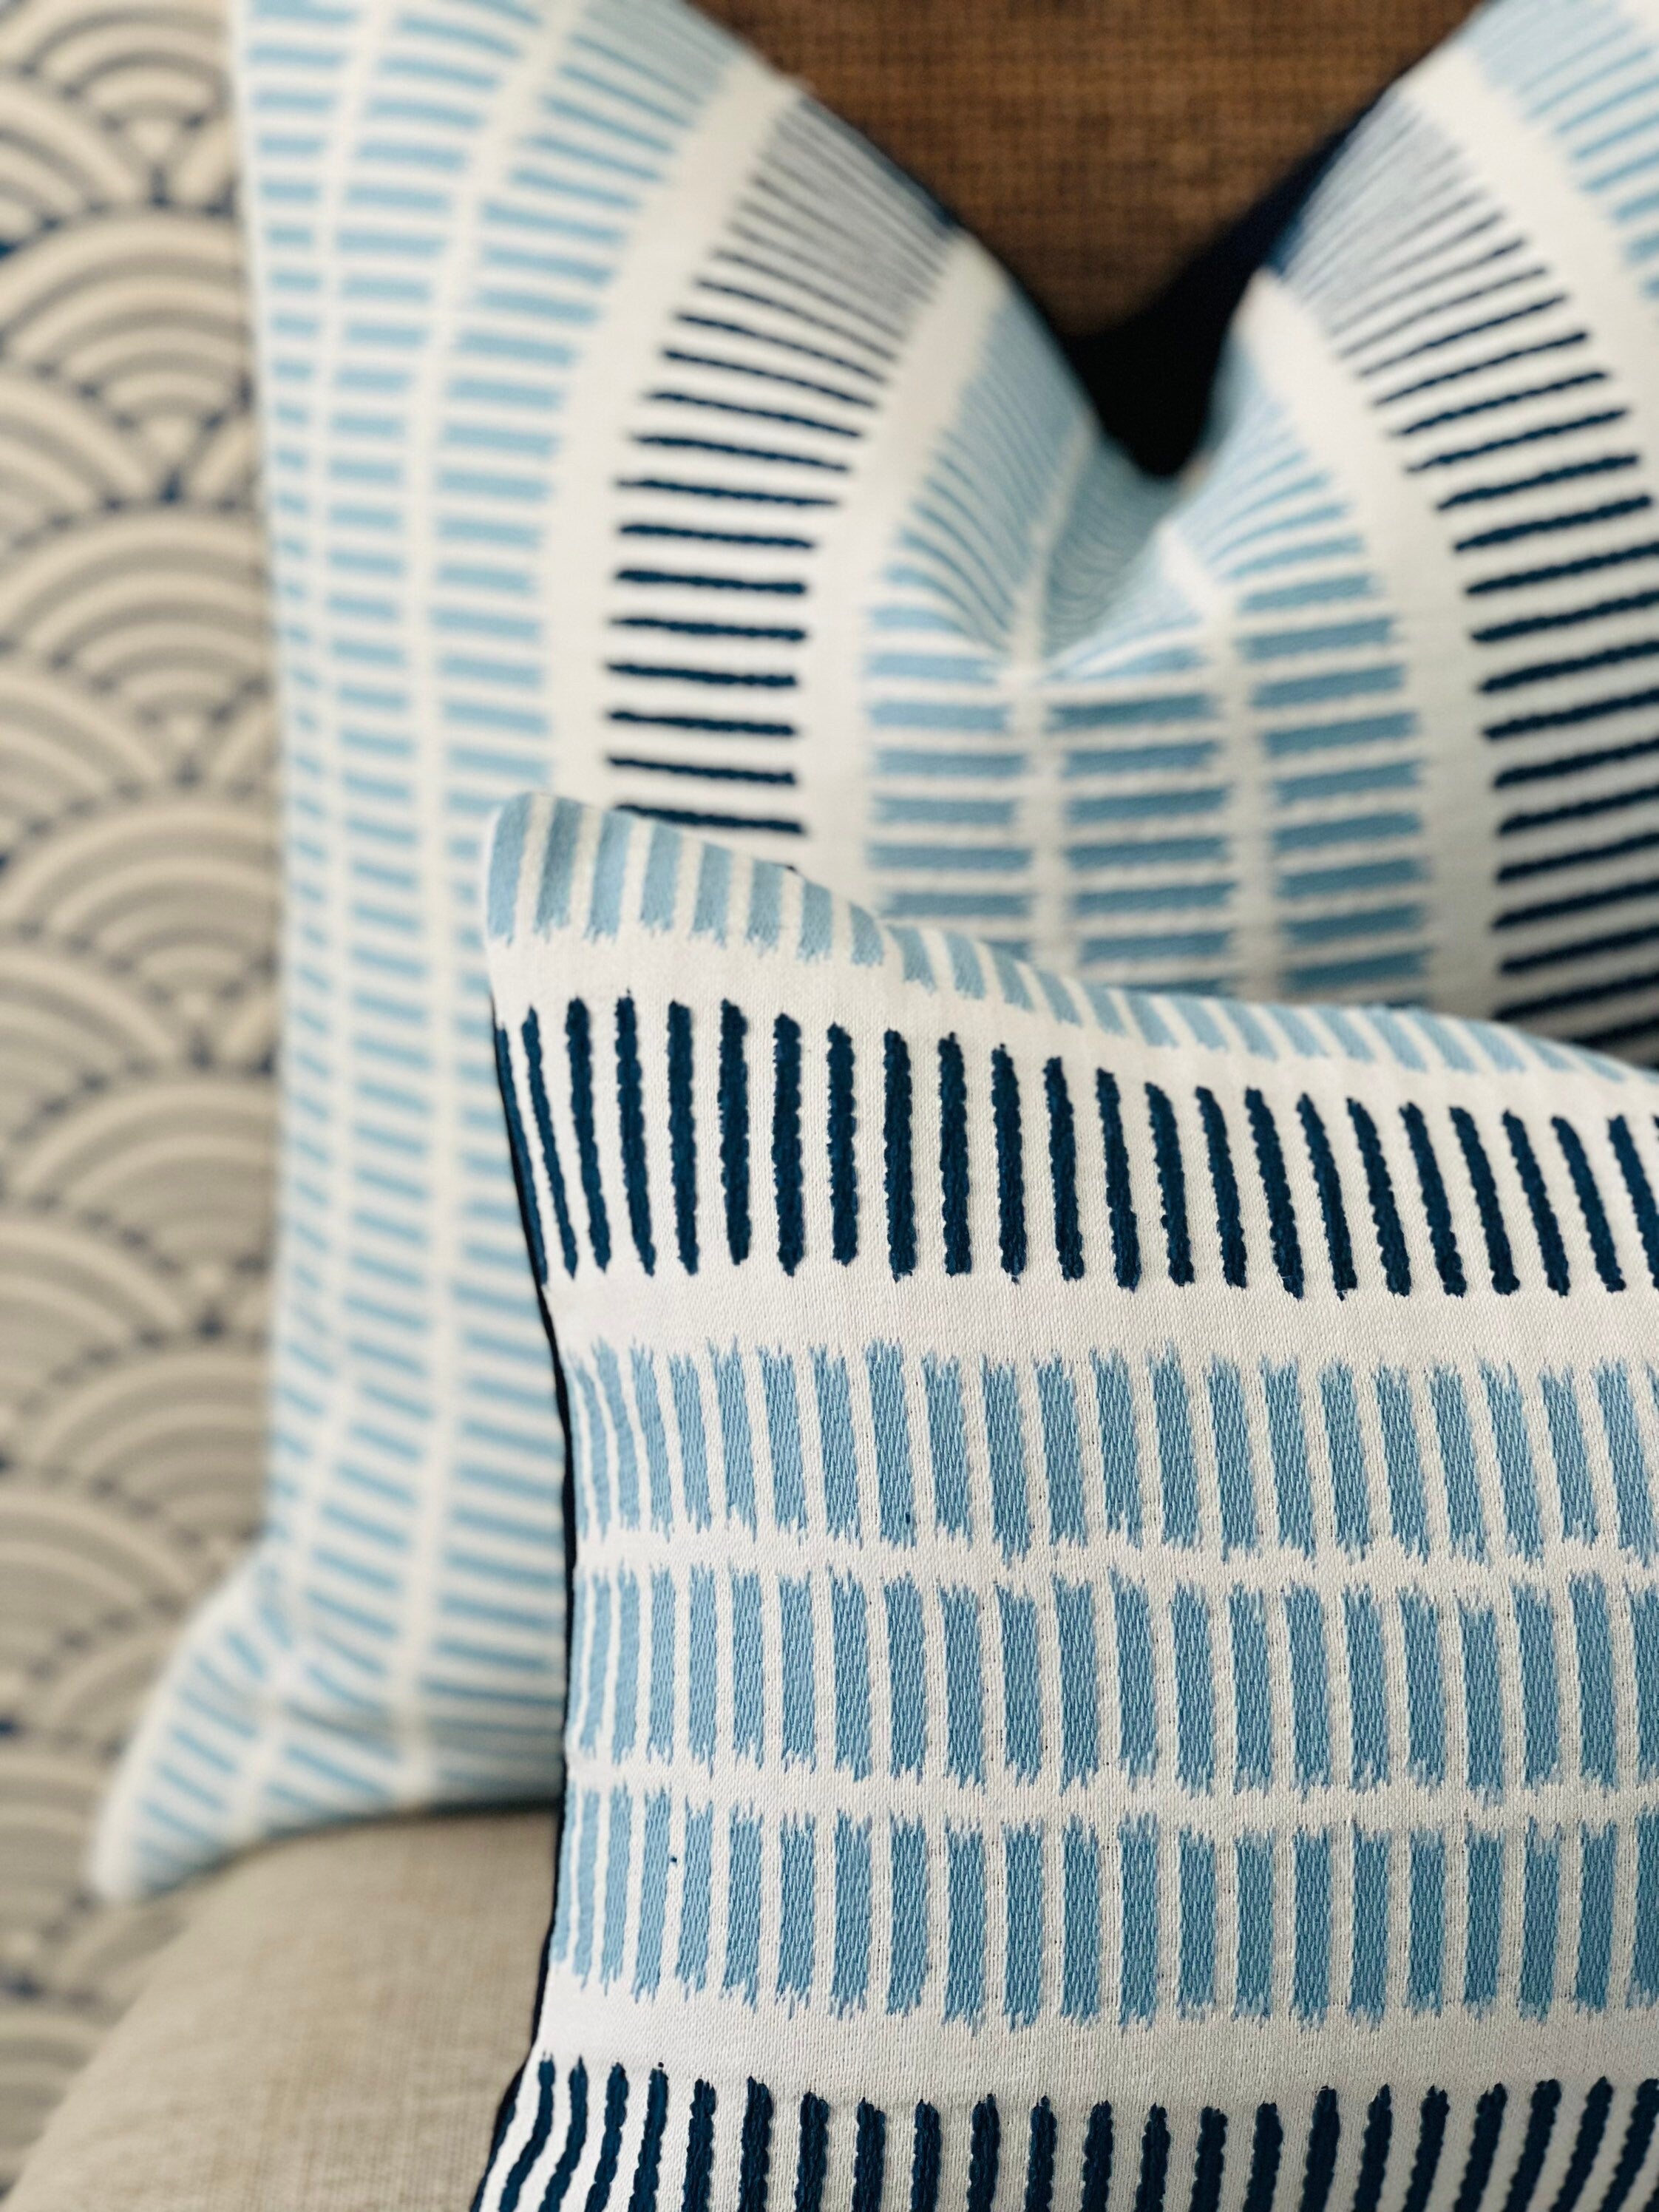 Outdoor/ Indoor Top Sail Striped Pillow in Sky and Marine. Designer Woven Decorative Sunbrella Outdoor Pillow Cover in Blue Striped